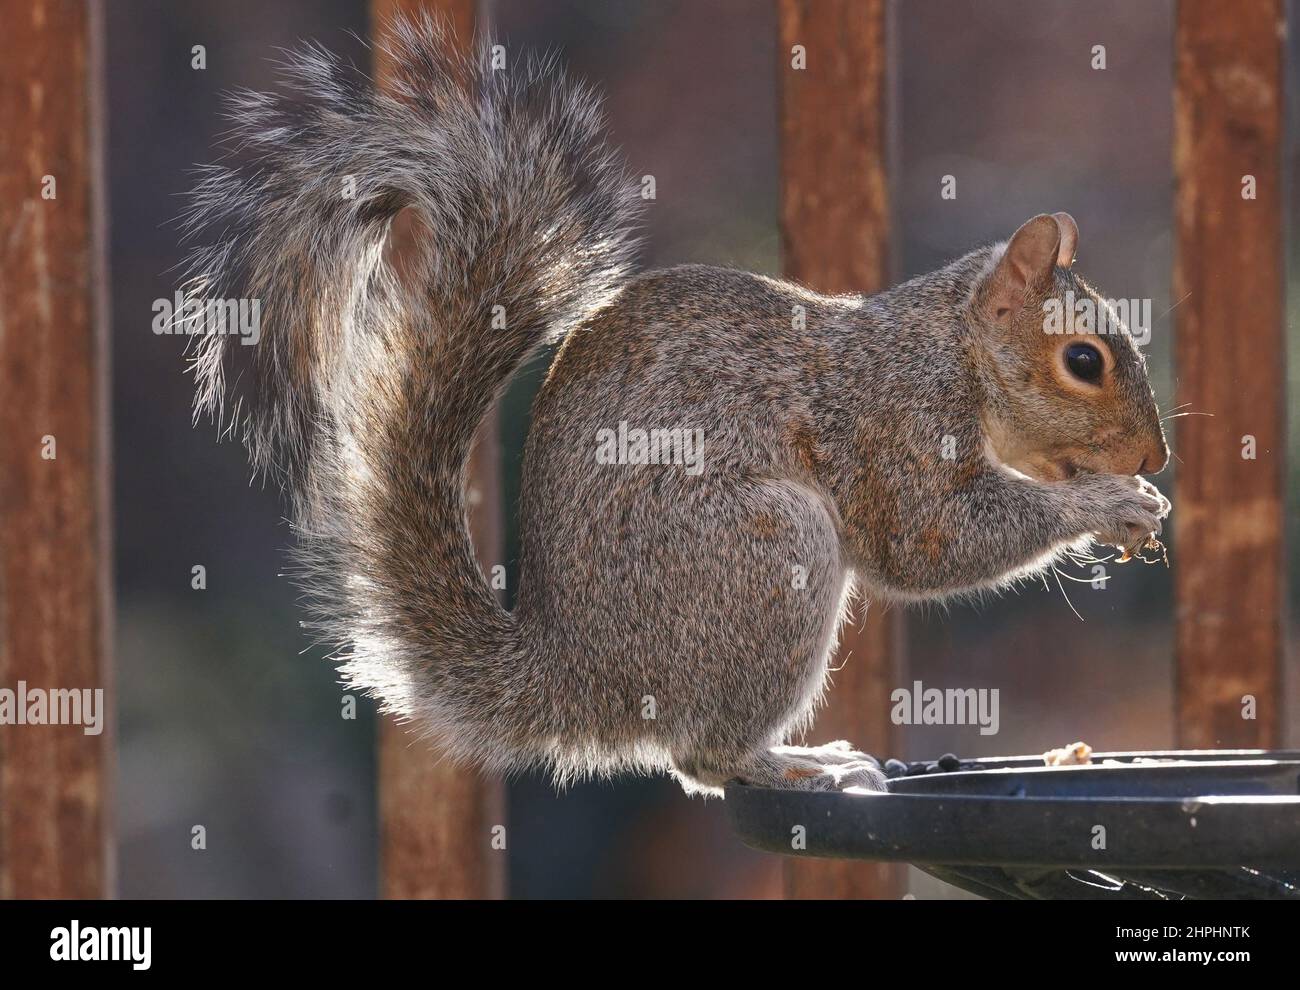 Squirrel on the garden deck Stock Photo